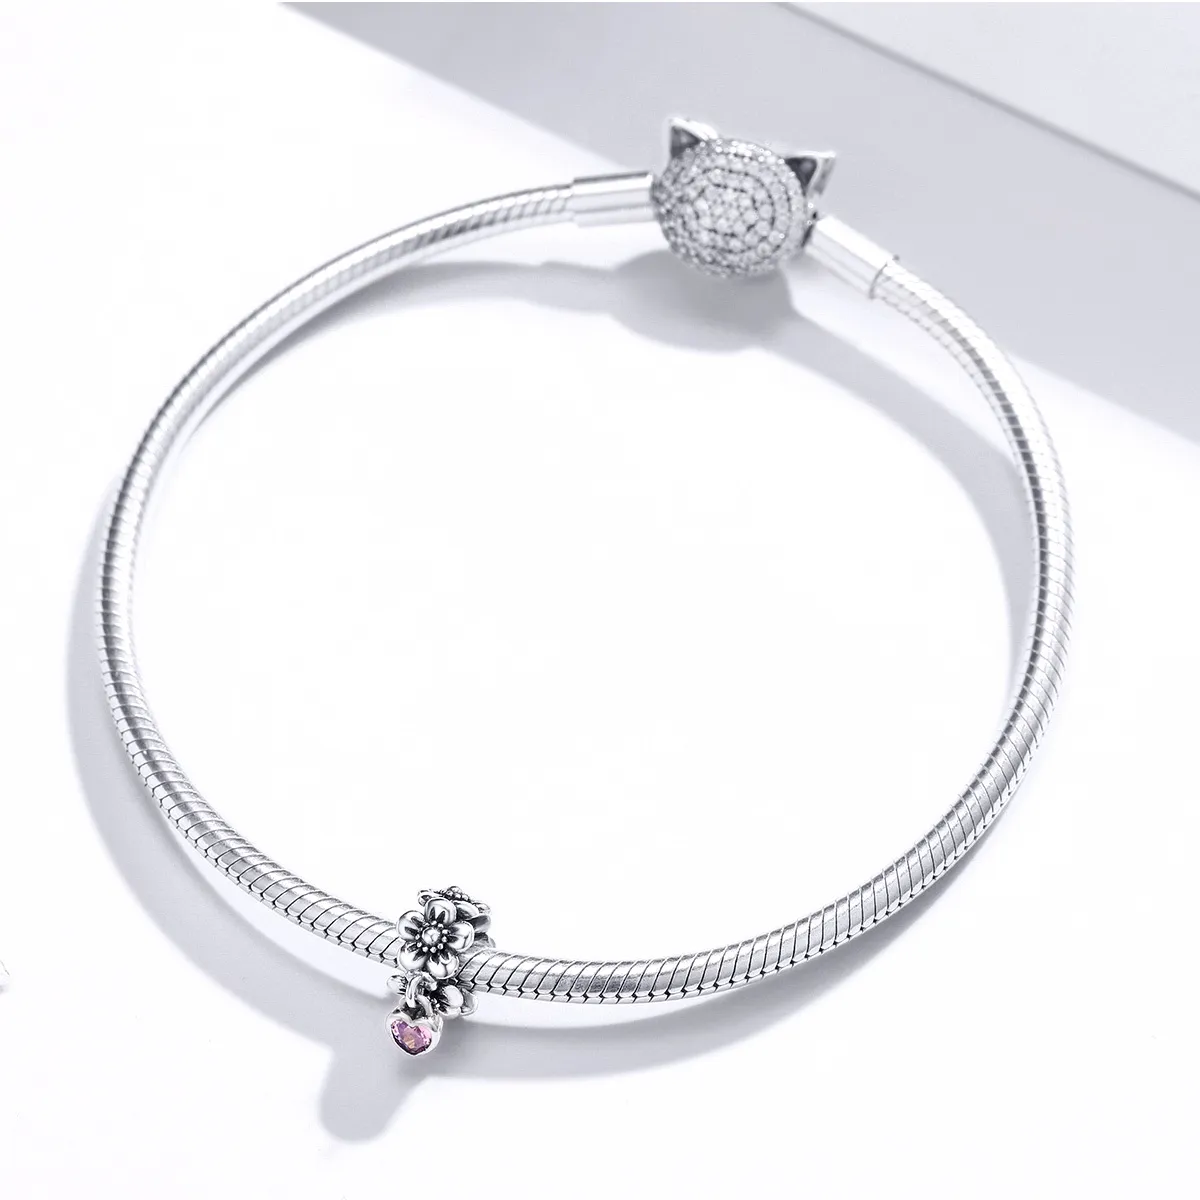 Pandora Style Silver Love Flower Charm - SCC1485